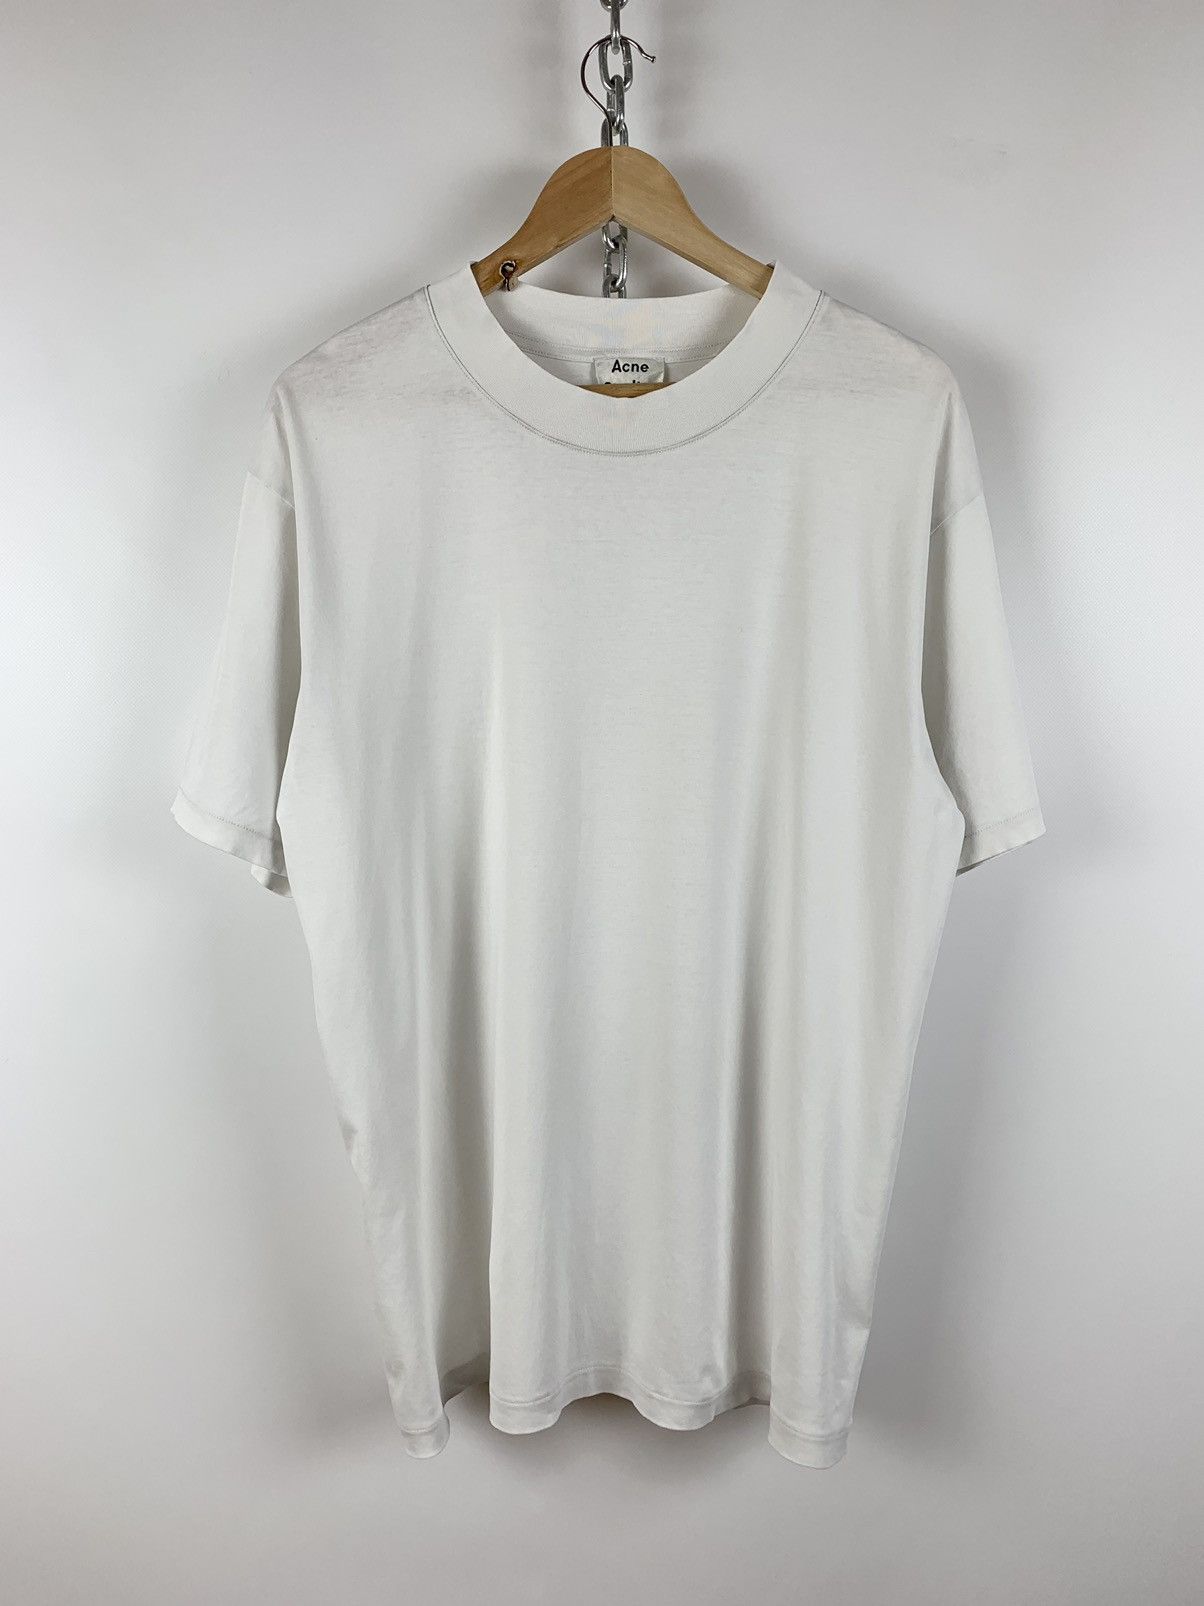 Acne Studios Acne Studios Naples Lux PSS17 White T-Shirt | Grailed